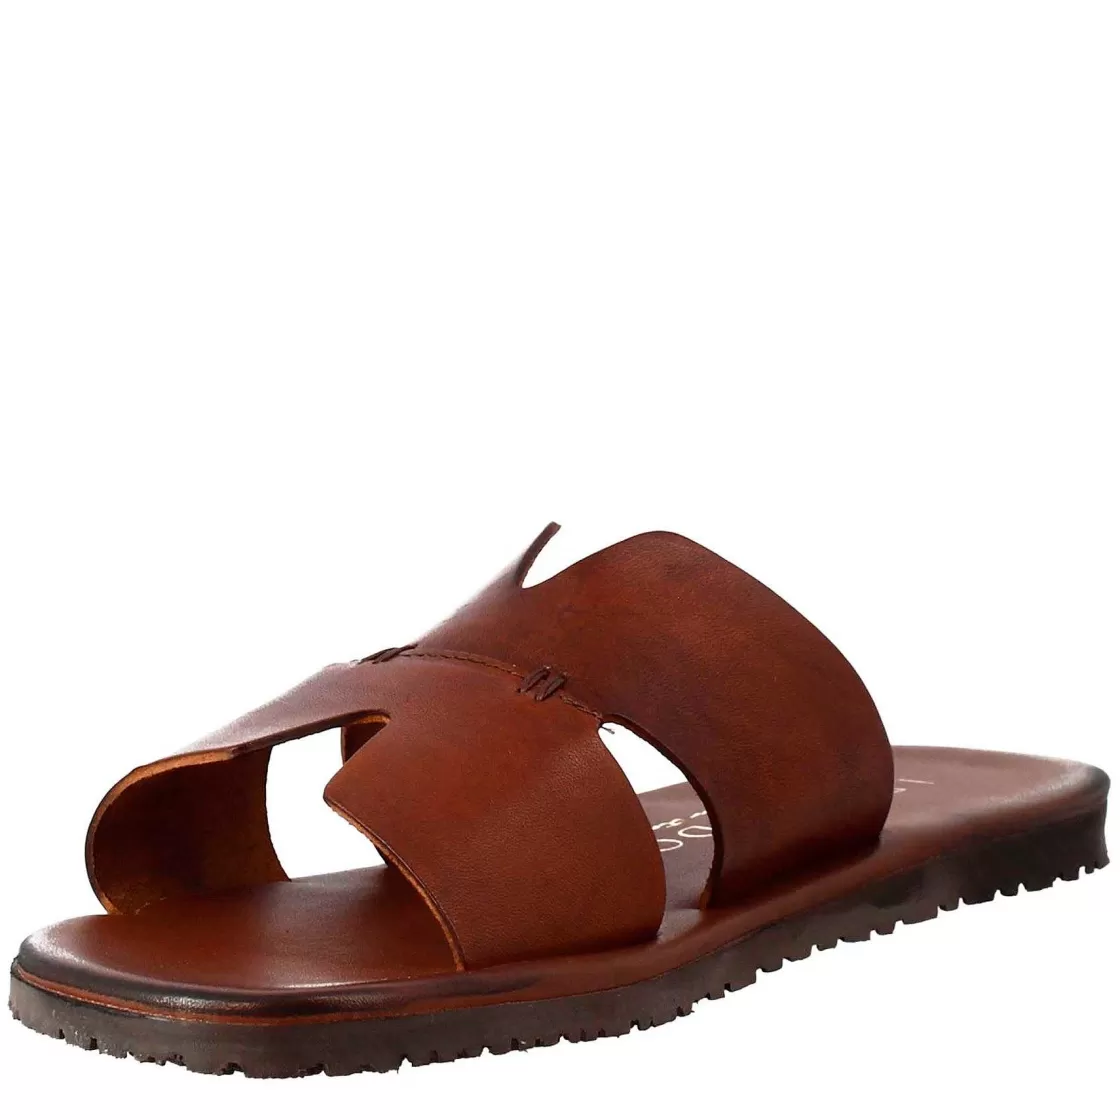 Leonardo Men'S H-Shaped Sandals In Brown Leather Best Sale